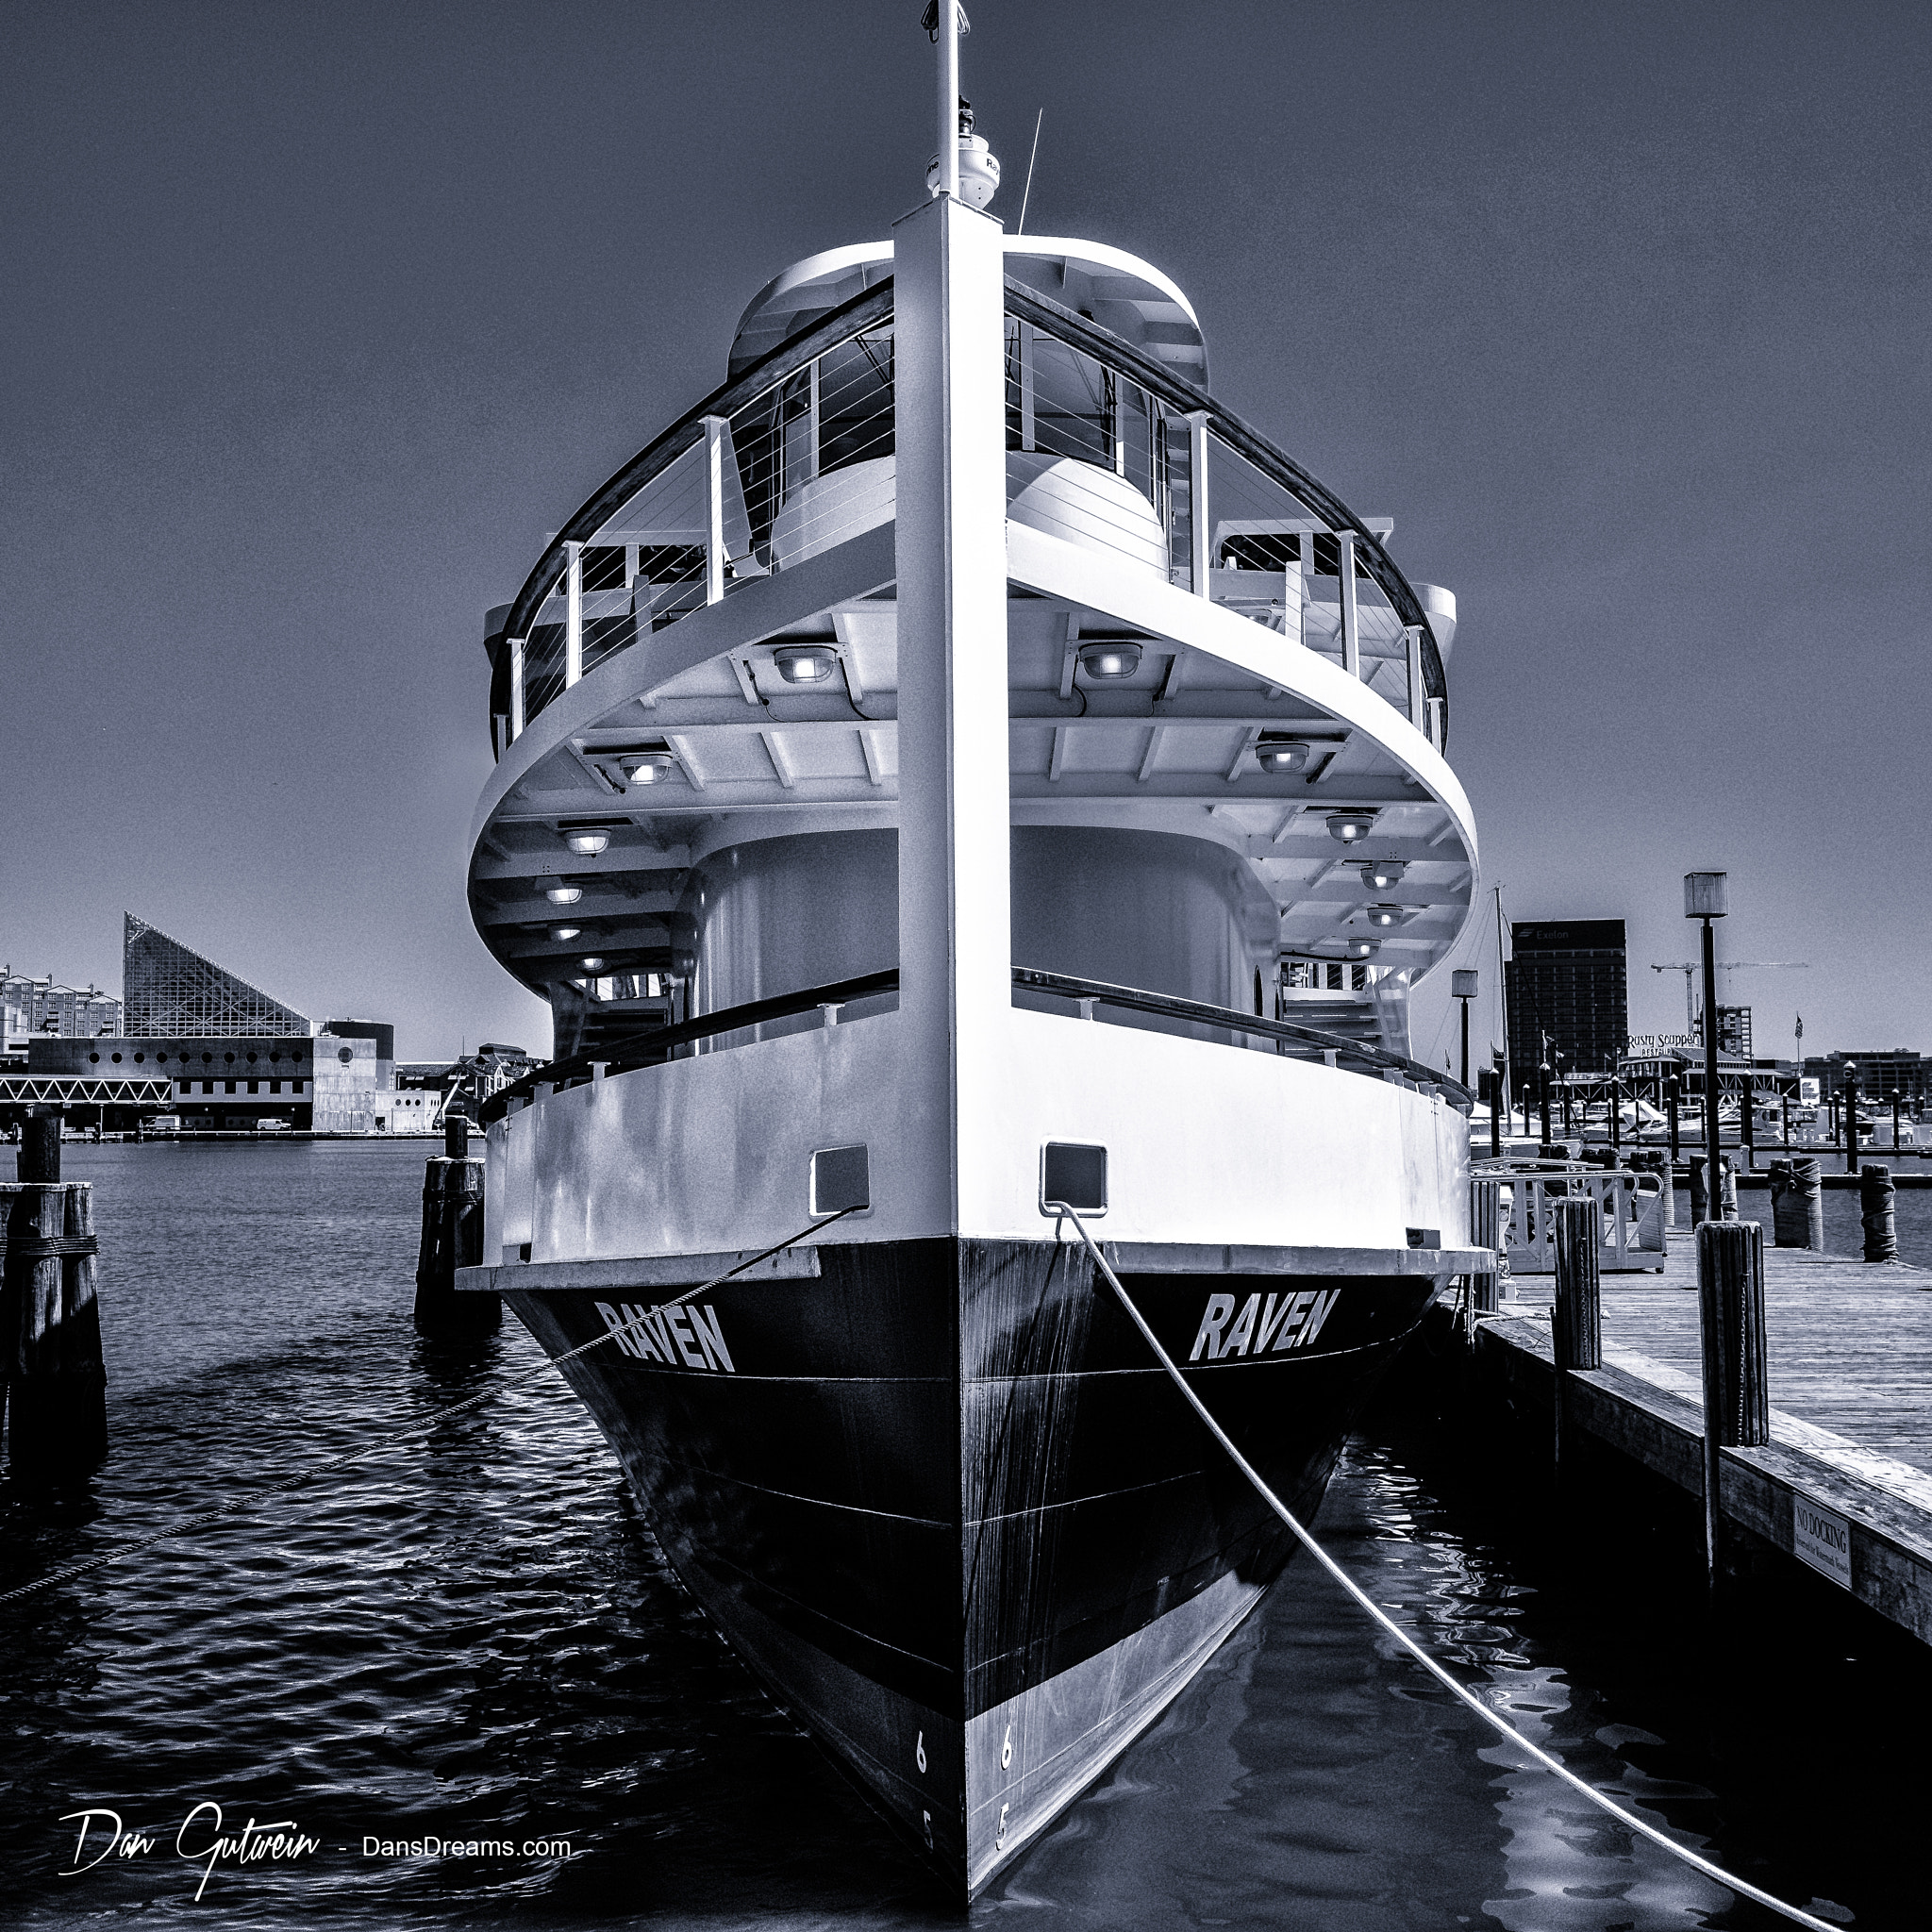 Fujifilm X-Pro2 sample photo. Baltimore - "raven" tour boat photography